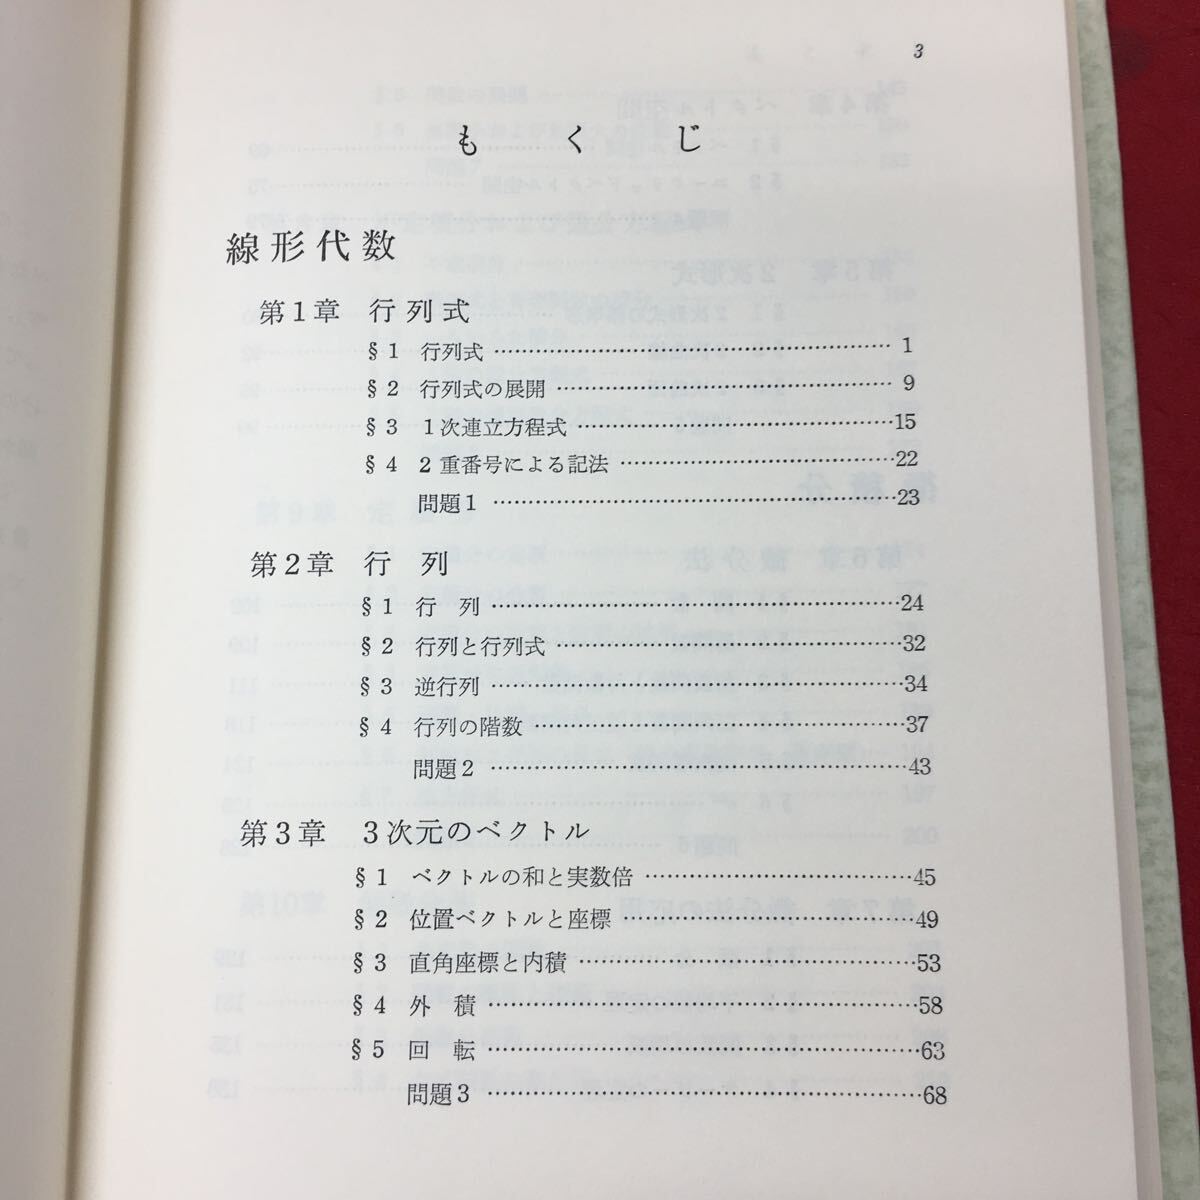 g-240※3 基礎数学 線形代数と微積分 著者 栗田稔 1976年4月 3版発行 学術図書出版社 数学 教材 行列 ベクトル 積分法 微分法 定積分_画像5